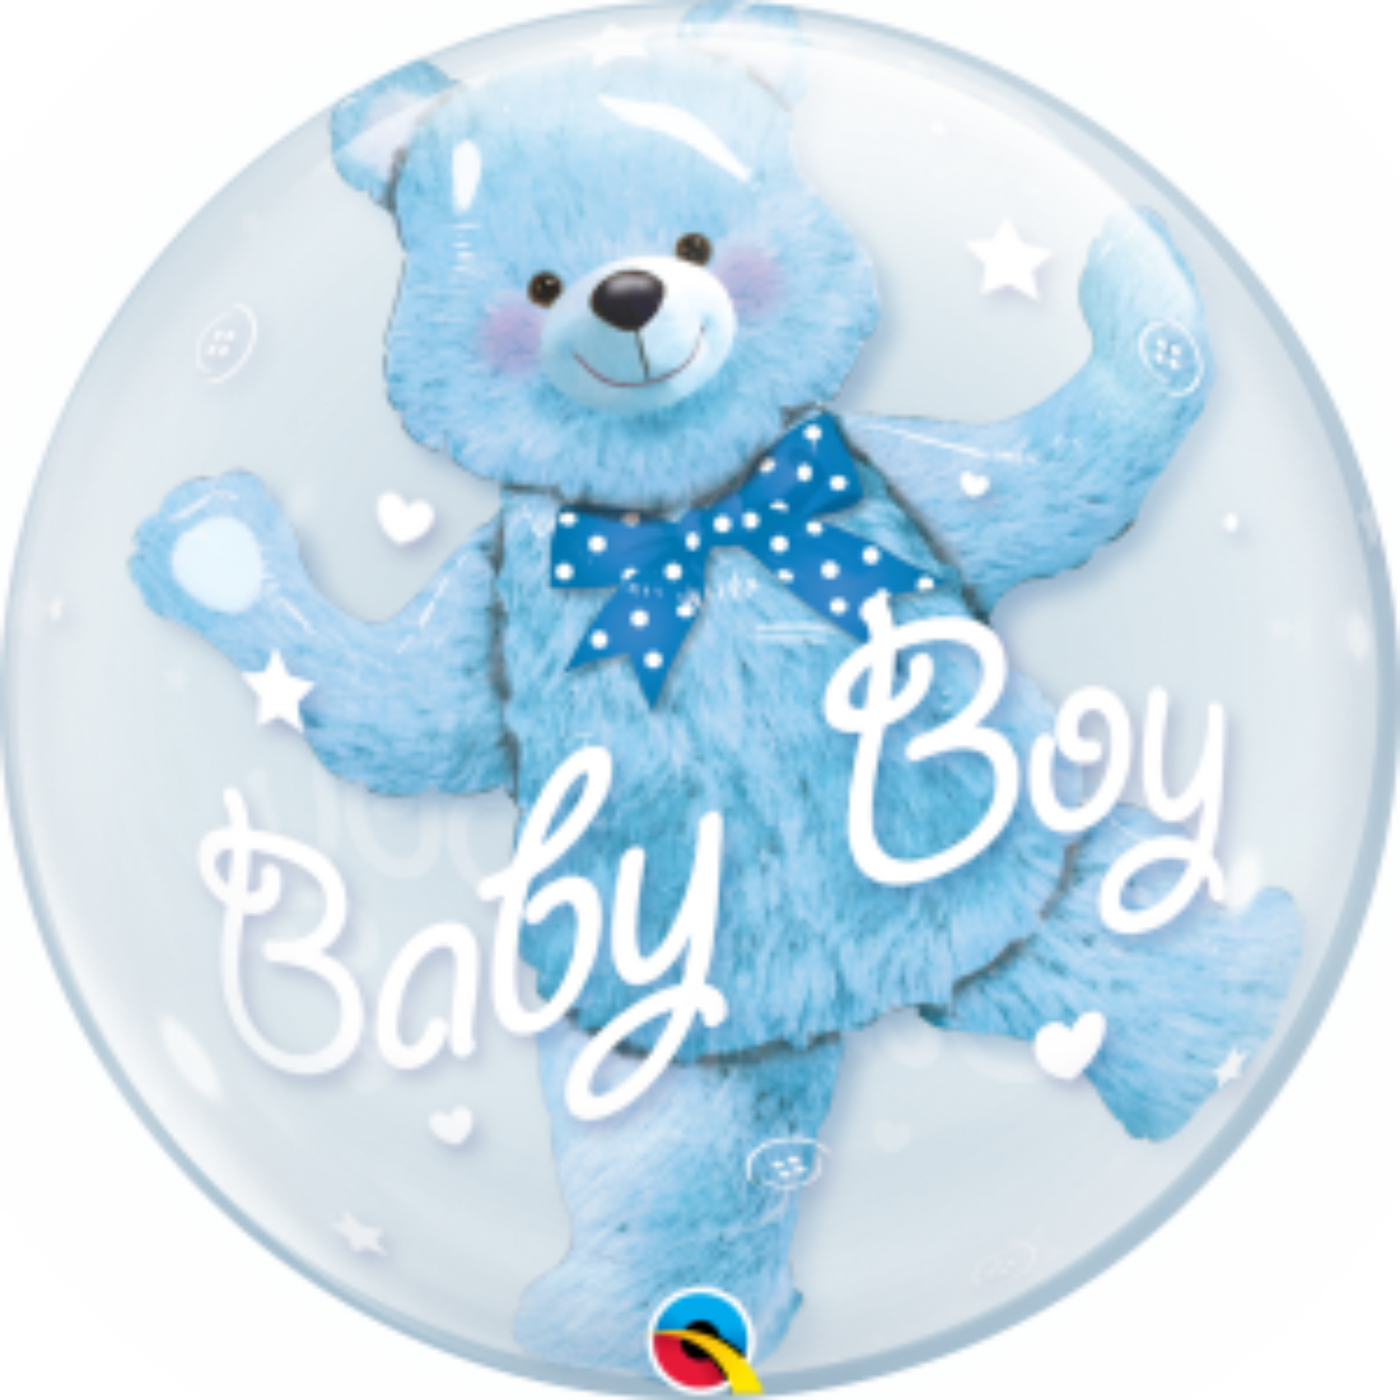 Blue Teddy Bear In a Bubble Balloon